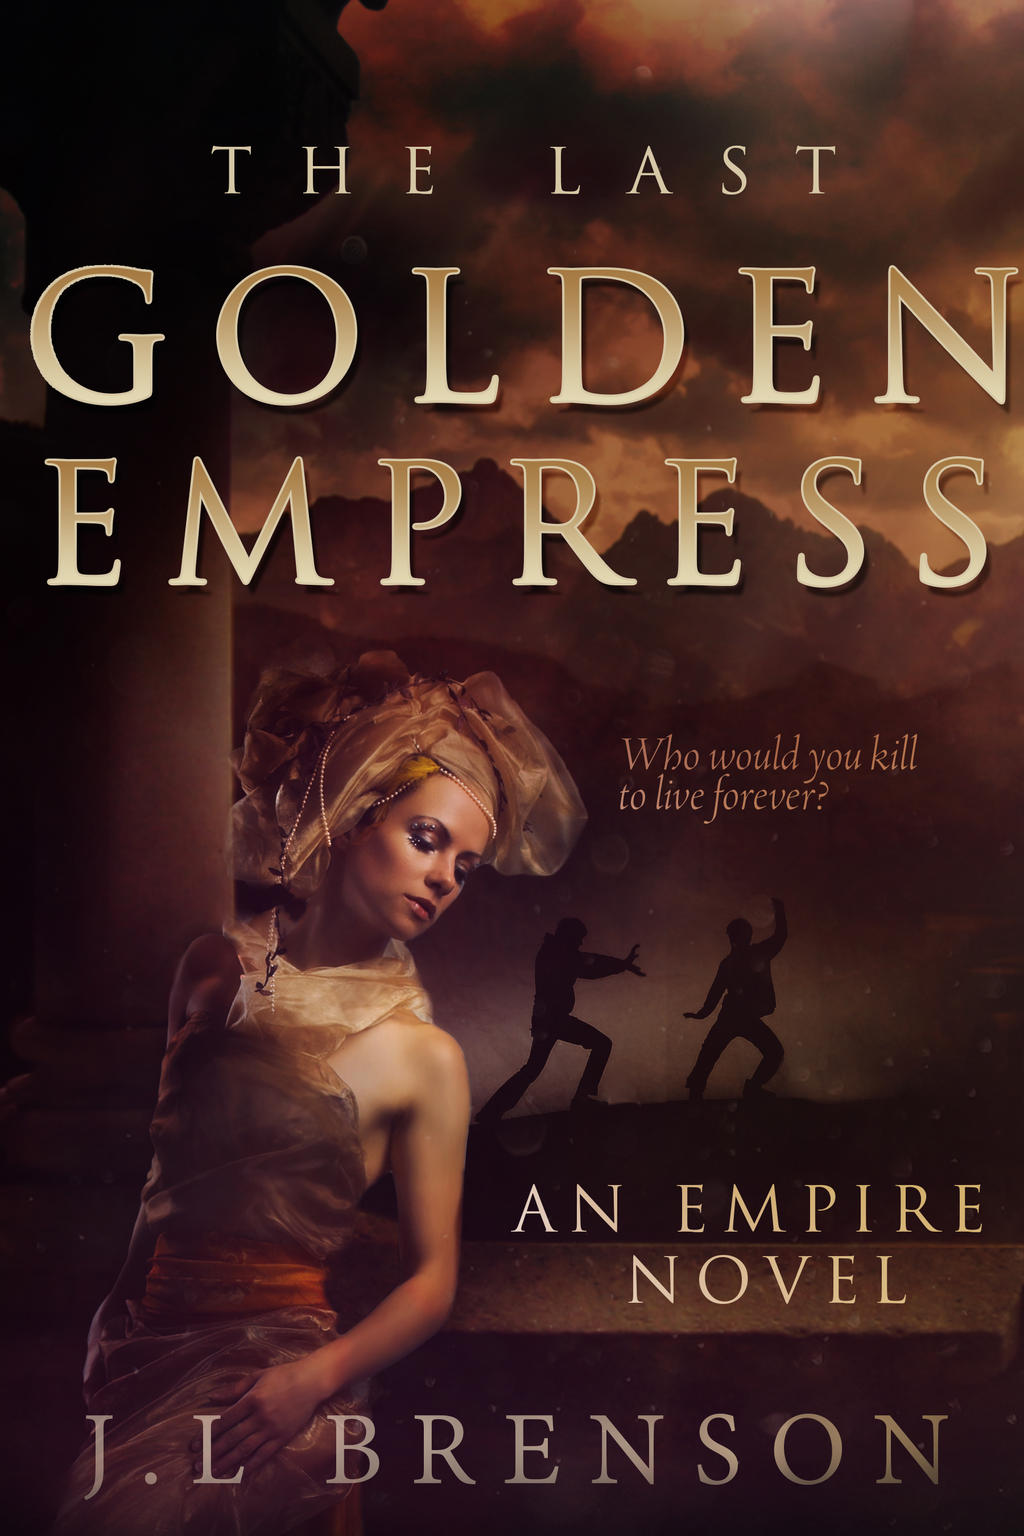 The Last Golden Empress